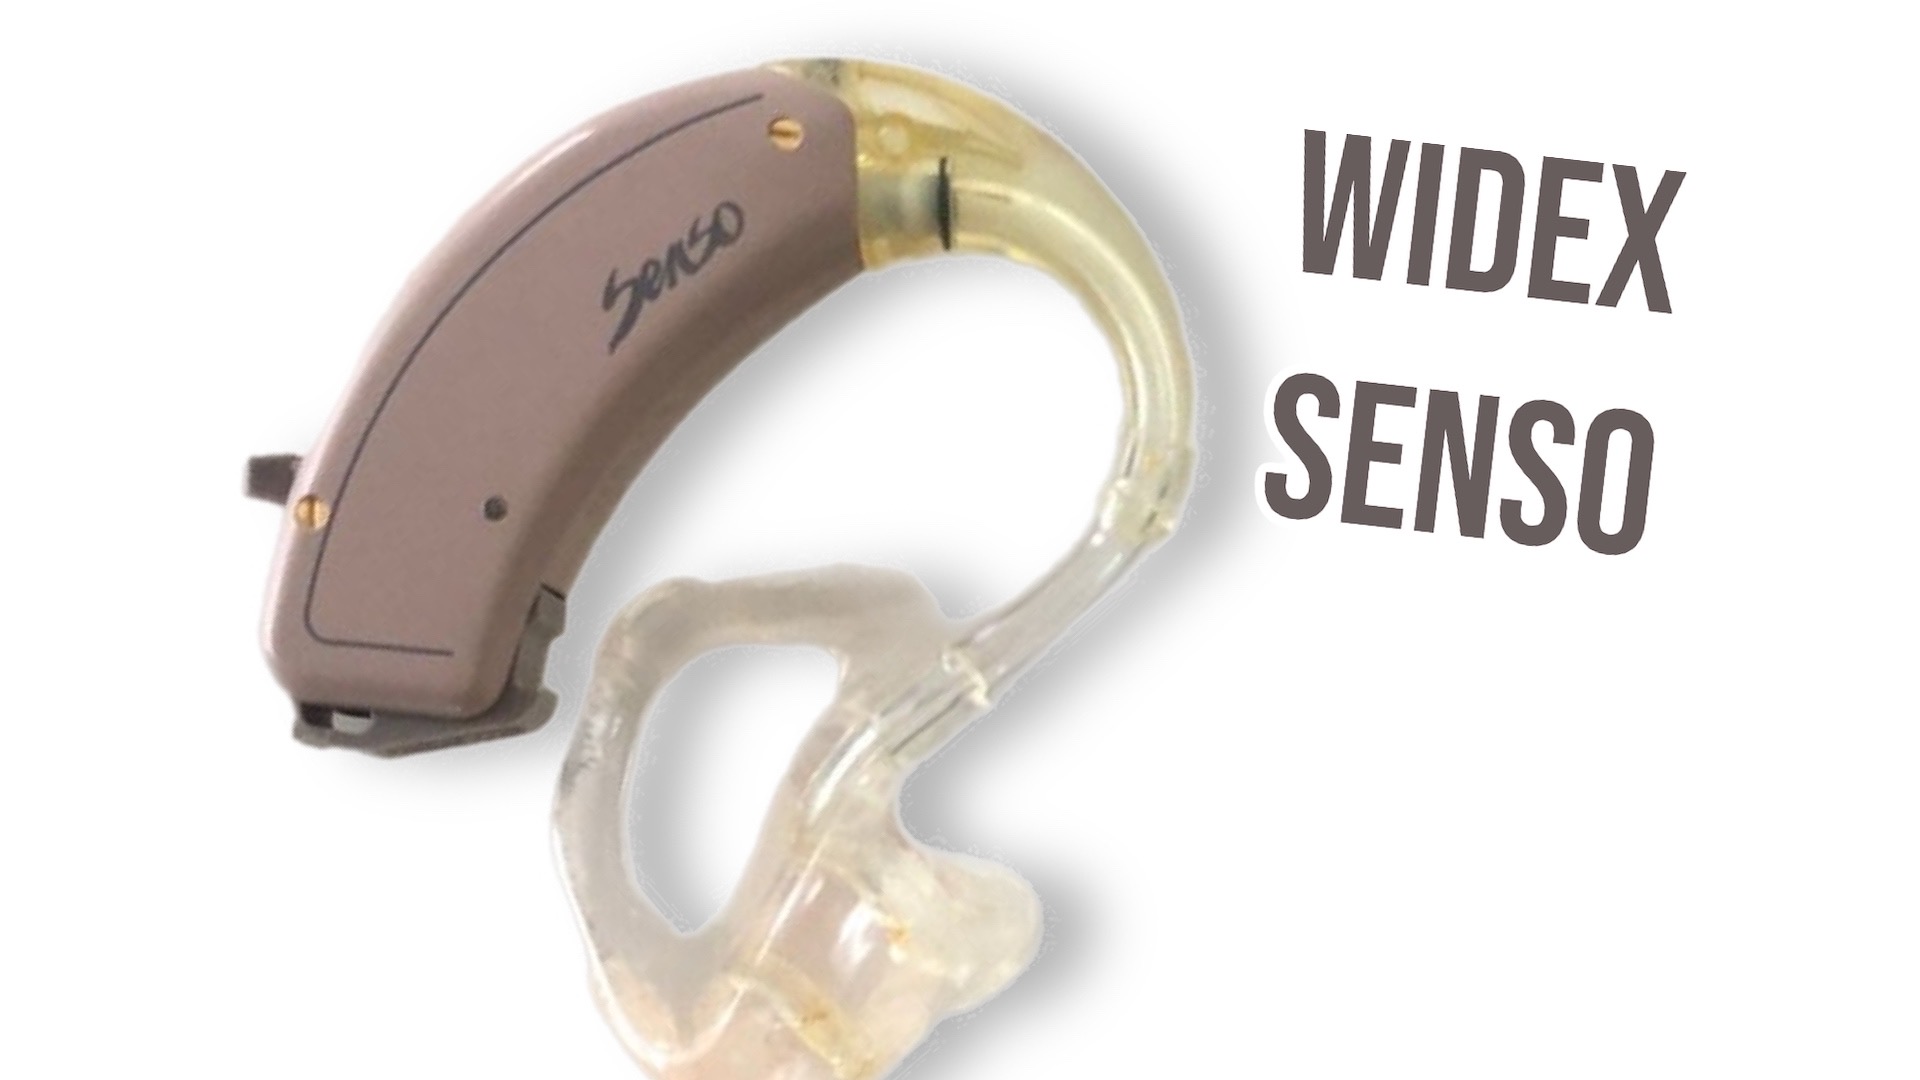 Widex Senso